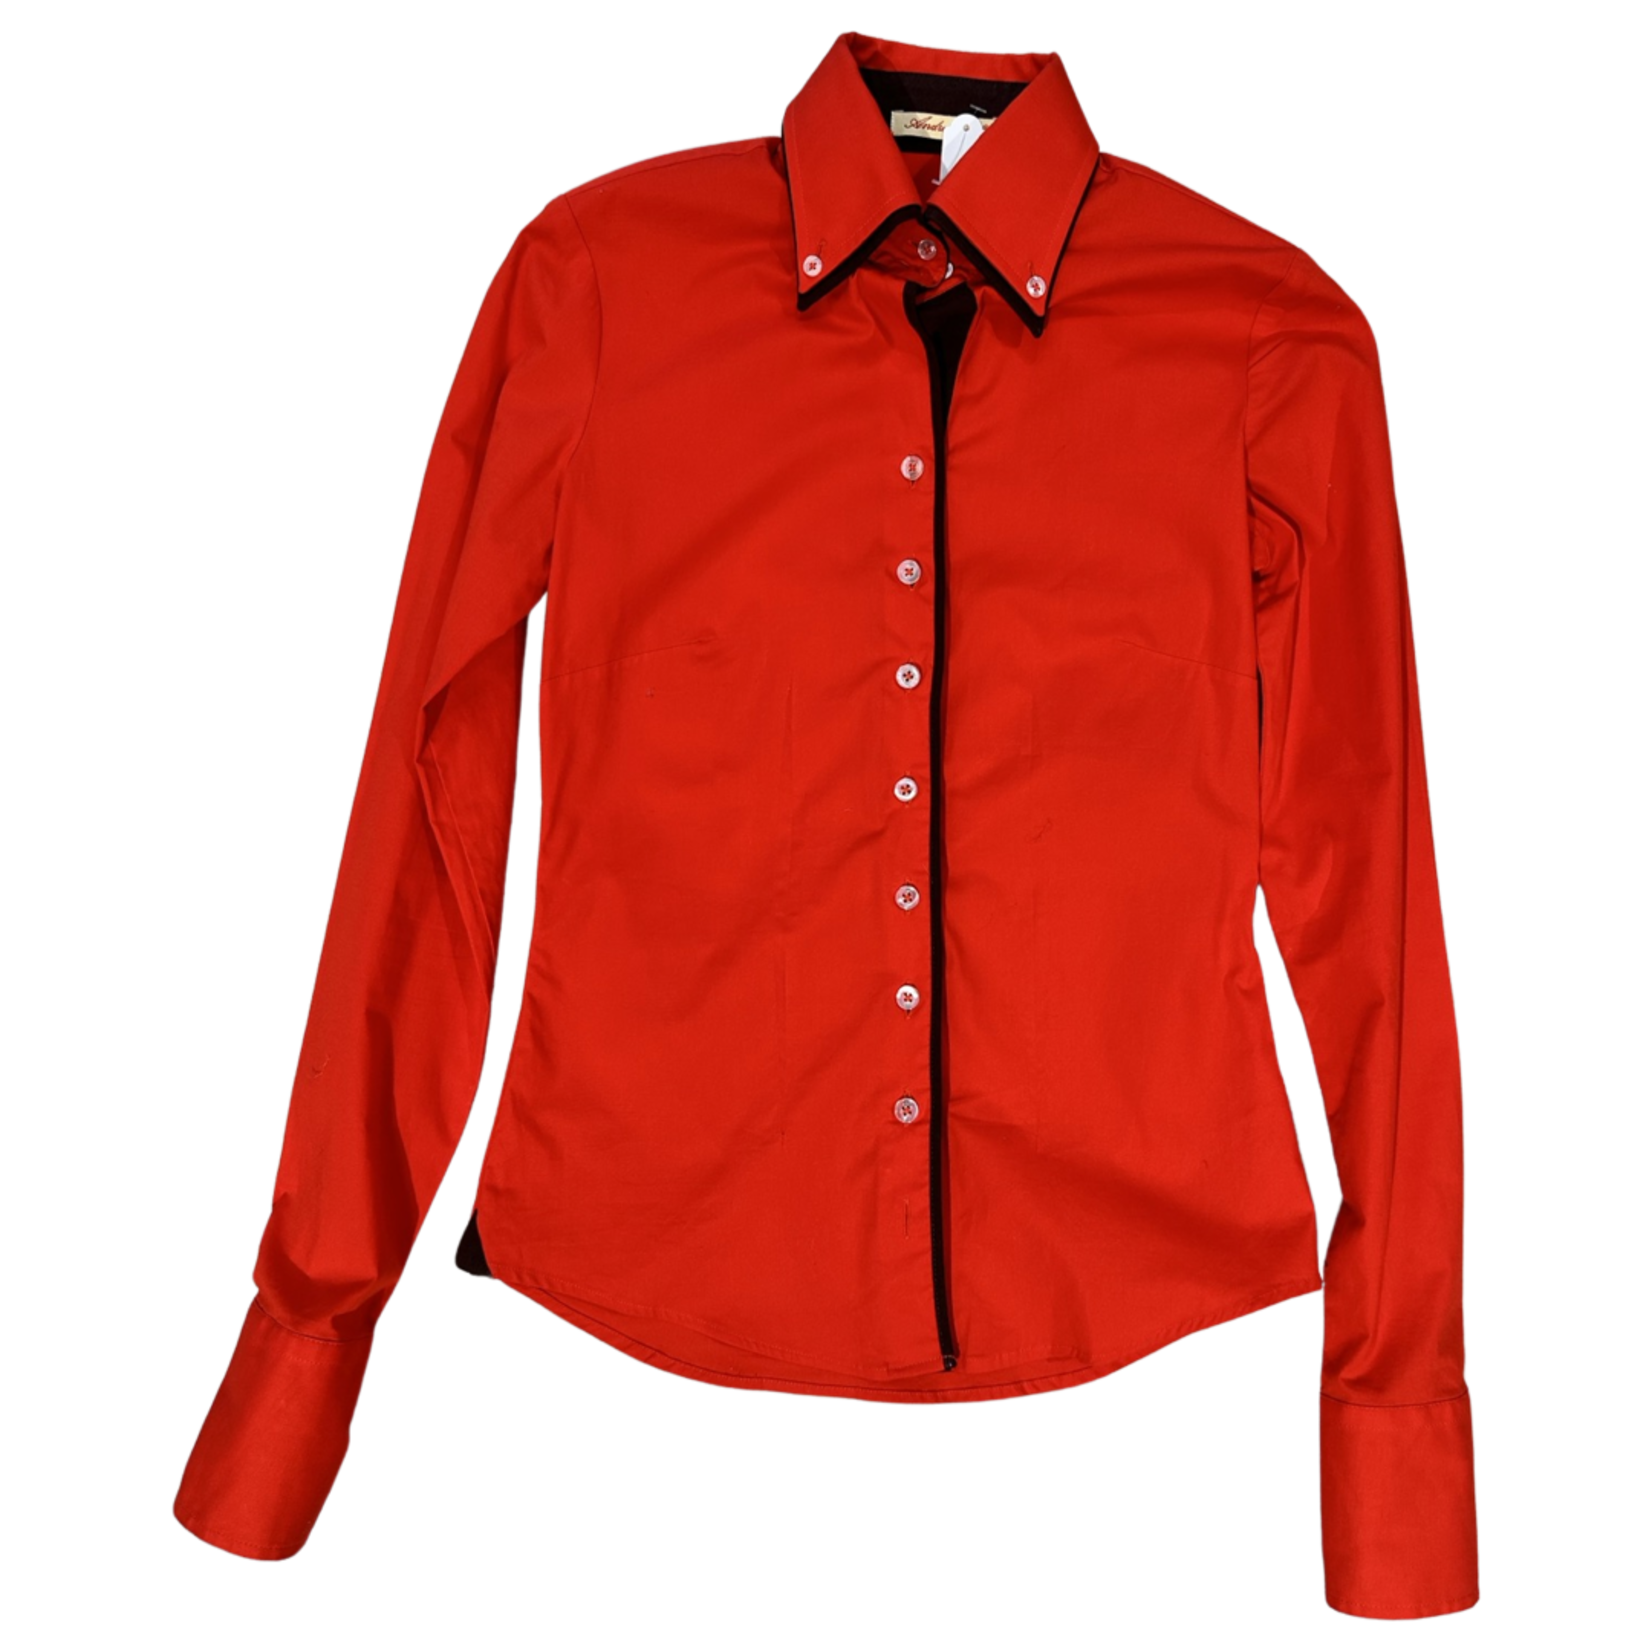 Vintage Vintage blouse orange red size XS